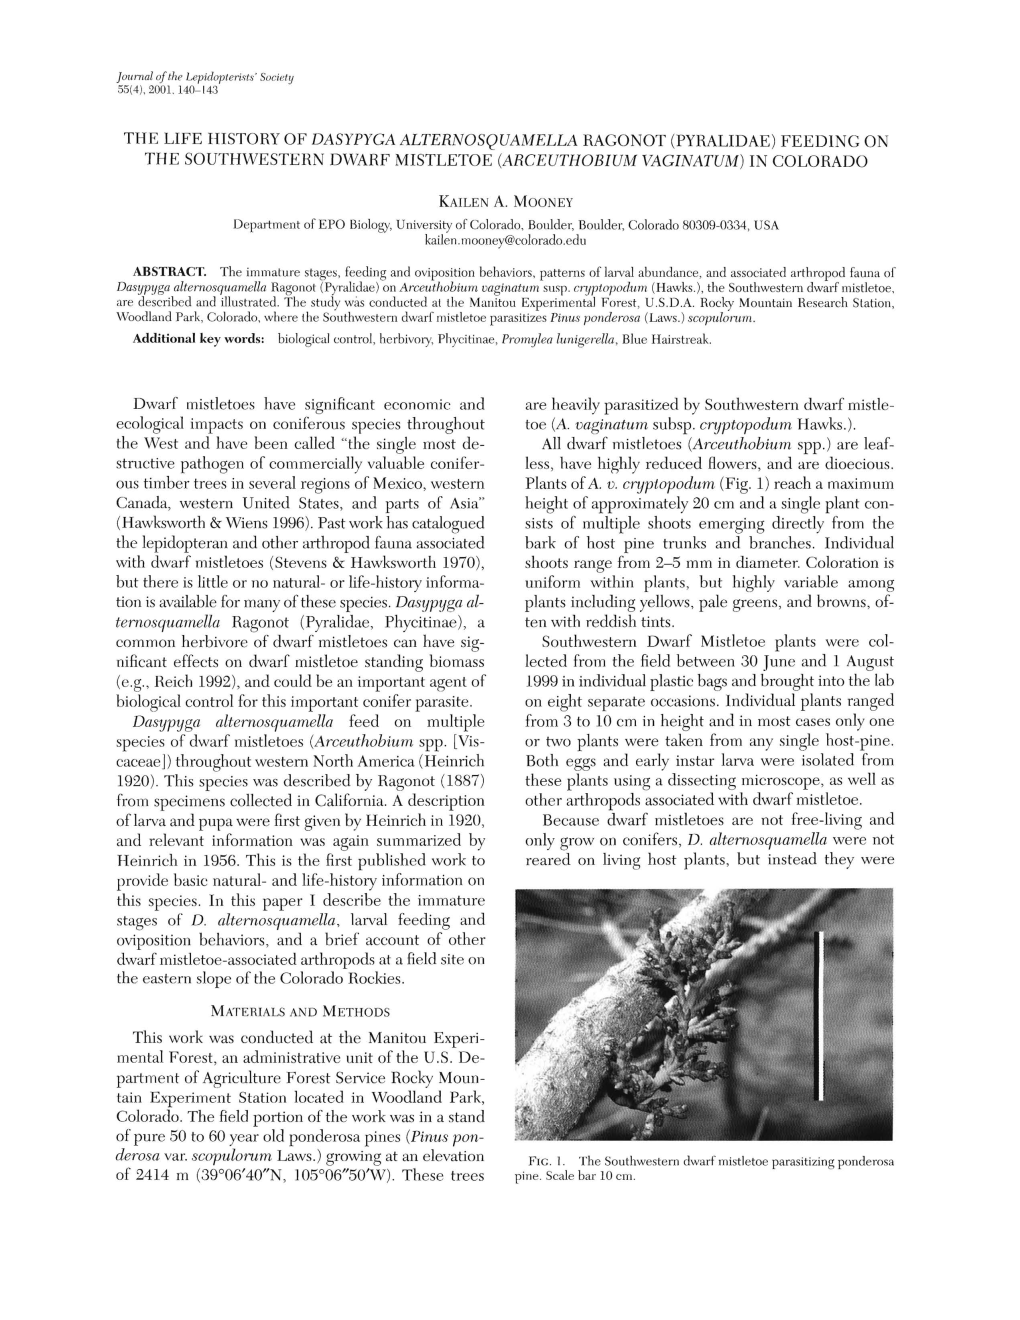 The Life History of Dasypyga Alternosquamella Ragonot (Pyralidae) Feeding on the Southwestern Dwarf Mistletoe (Arceuthobium Vaginatum) in Colorado